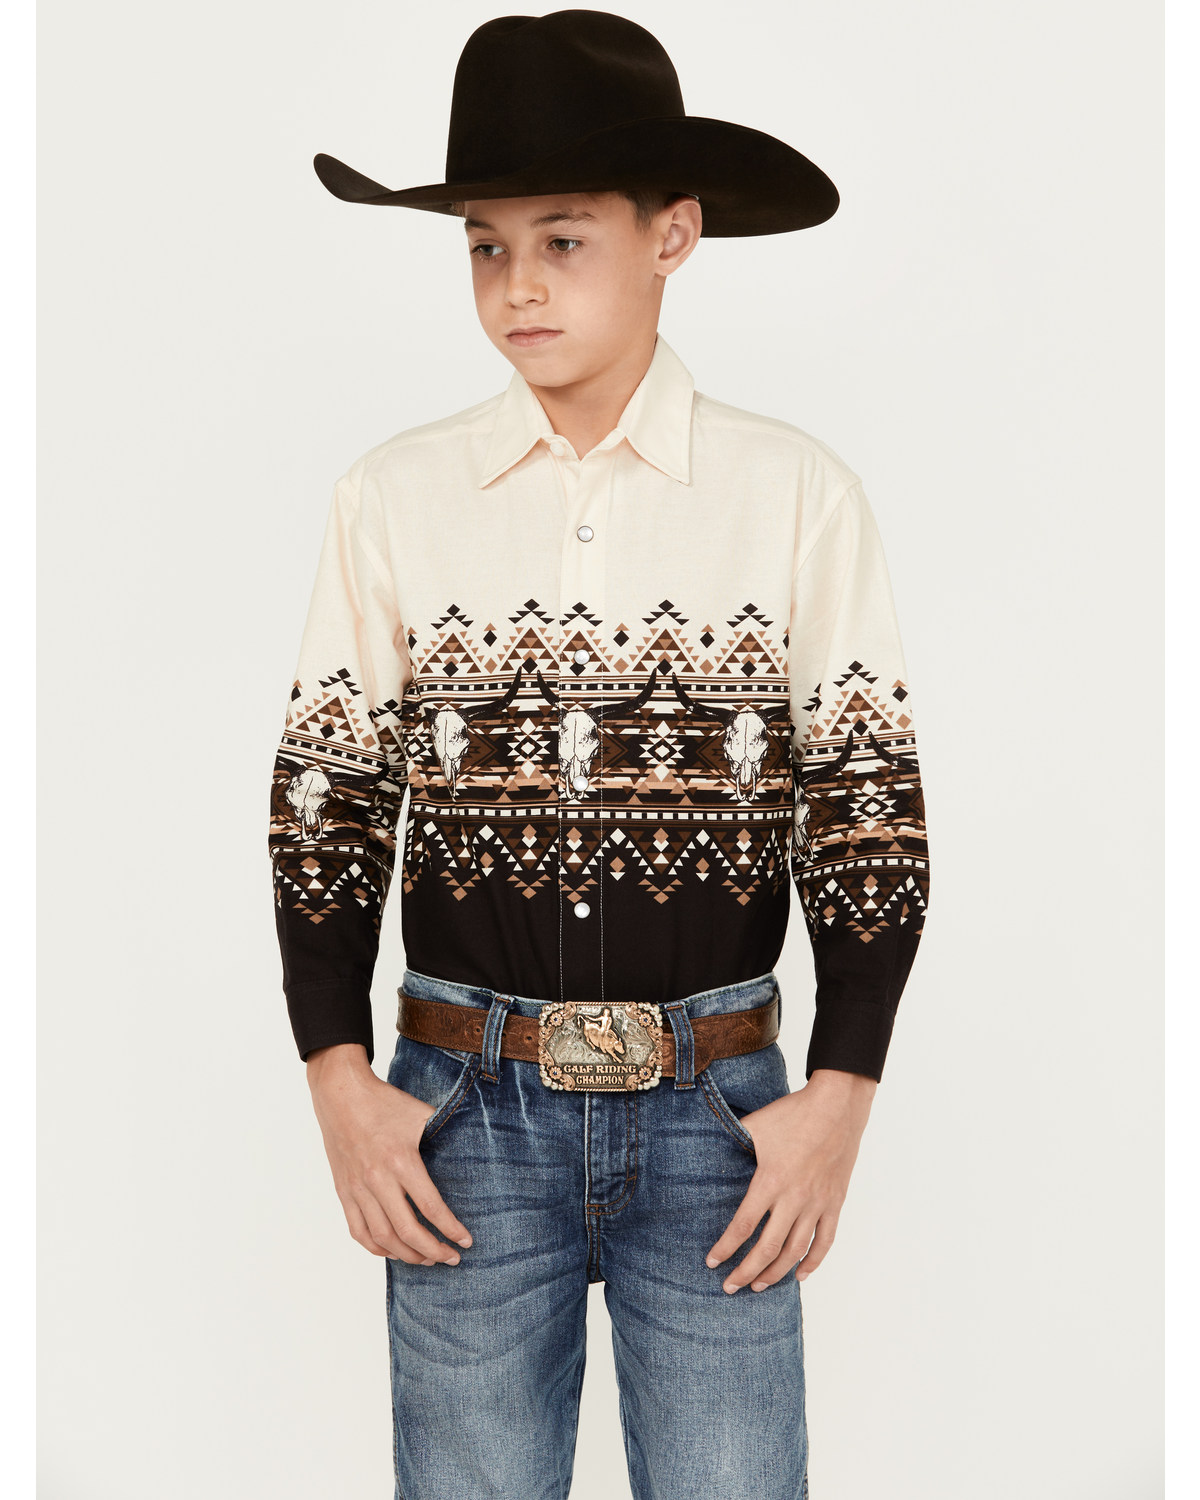 Panhandle Boys' Steer Head Southwestern Border Print Long Sleeve Pearl Snap Shirt